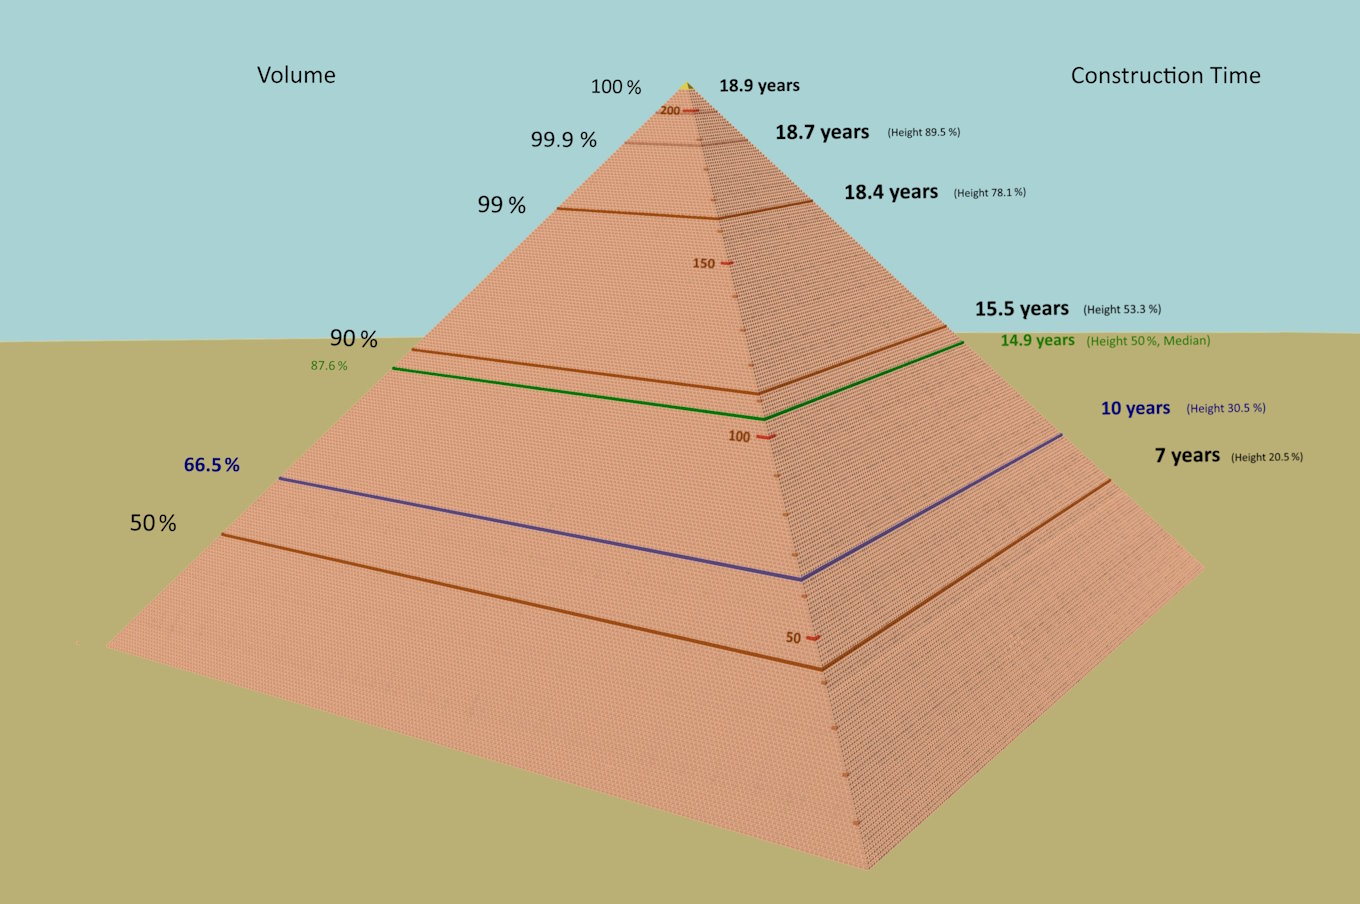 construction great pyramid of giza